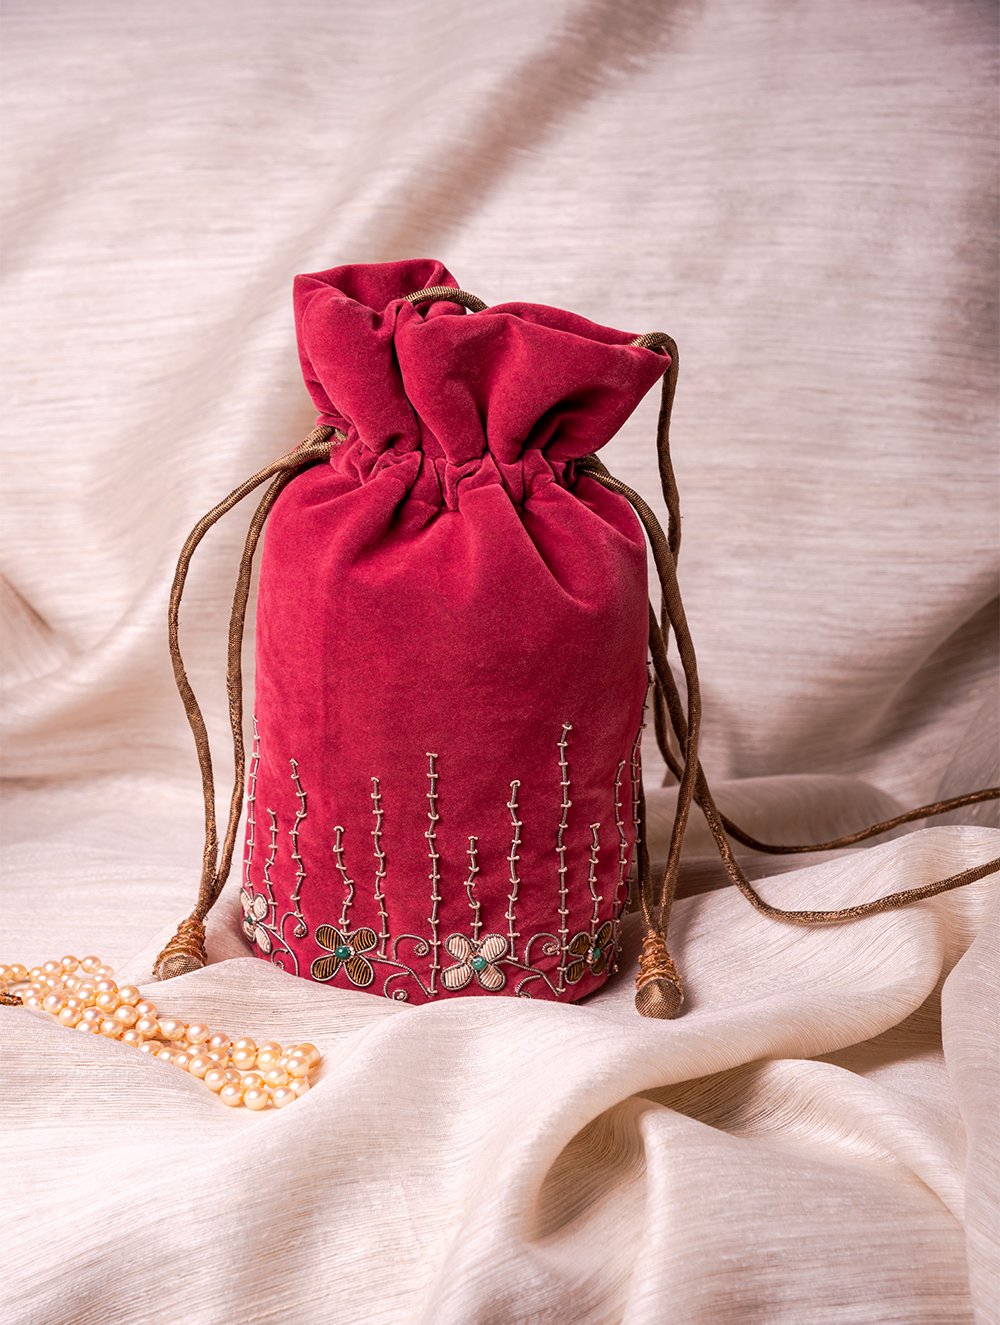 Buy Pink Bags Online in India at Best Price - Westside